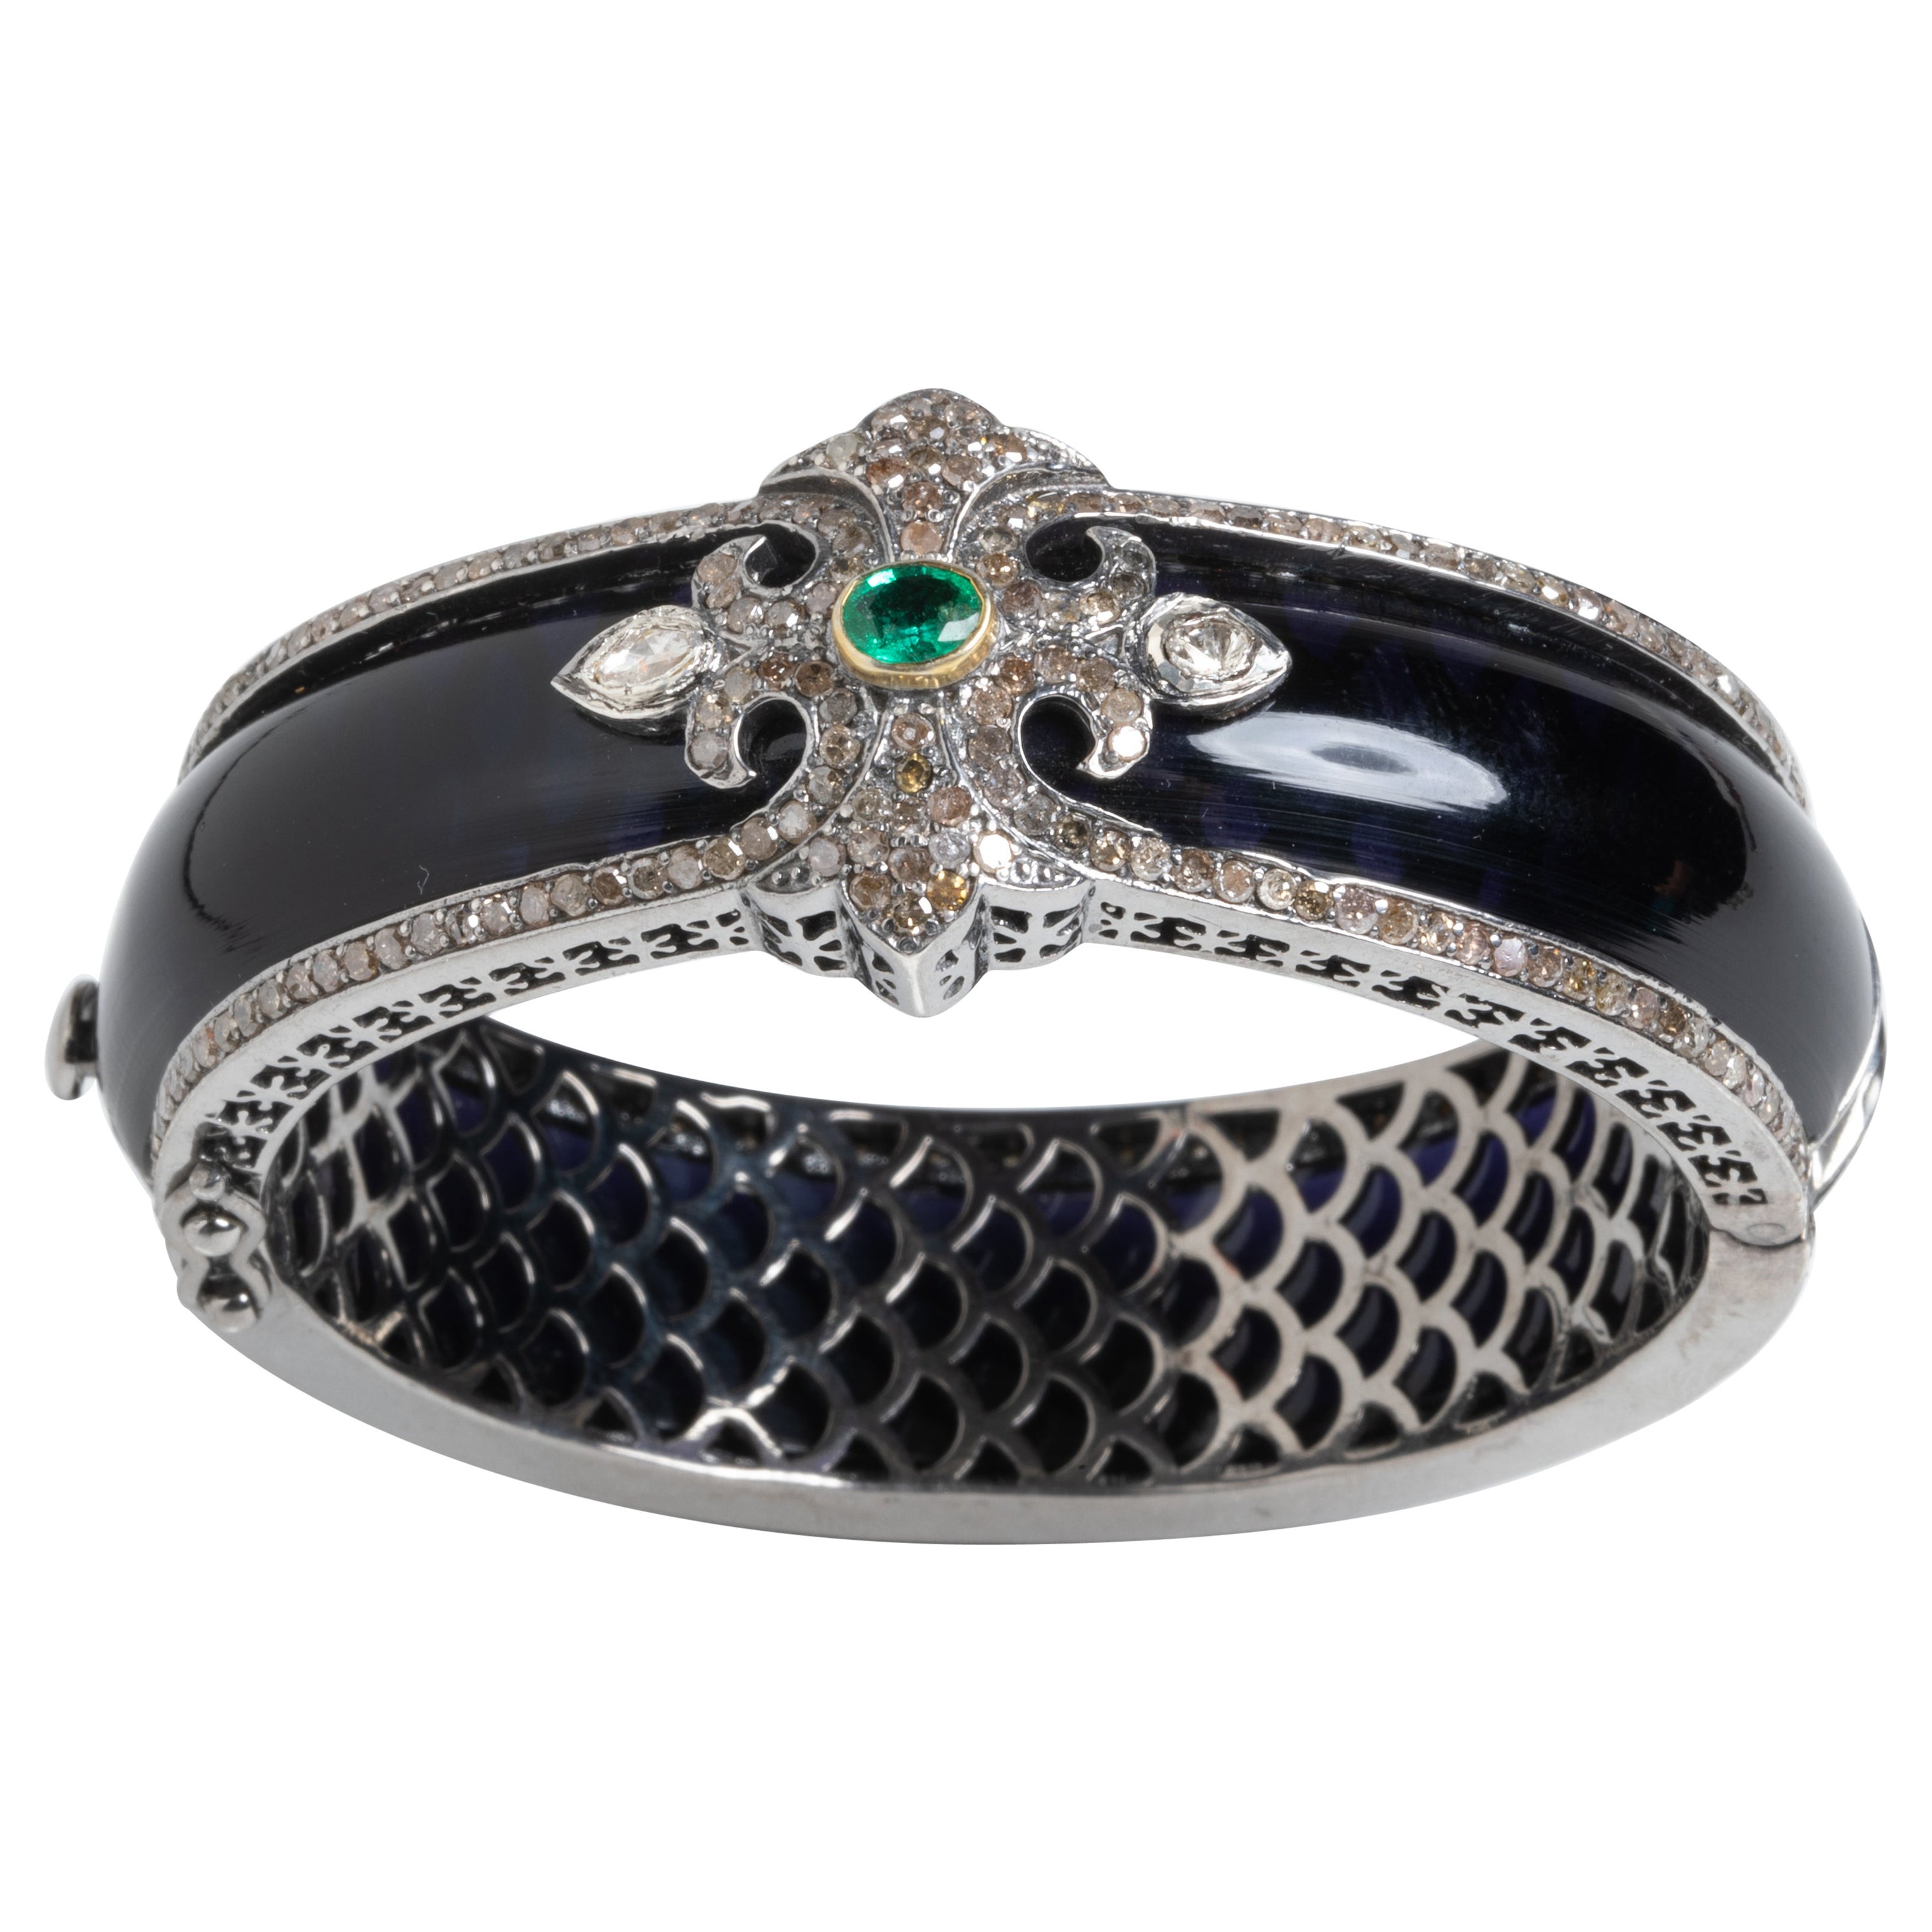 Black Bakelite, Diamond, Emerald and Sterling Silver Bracelet